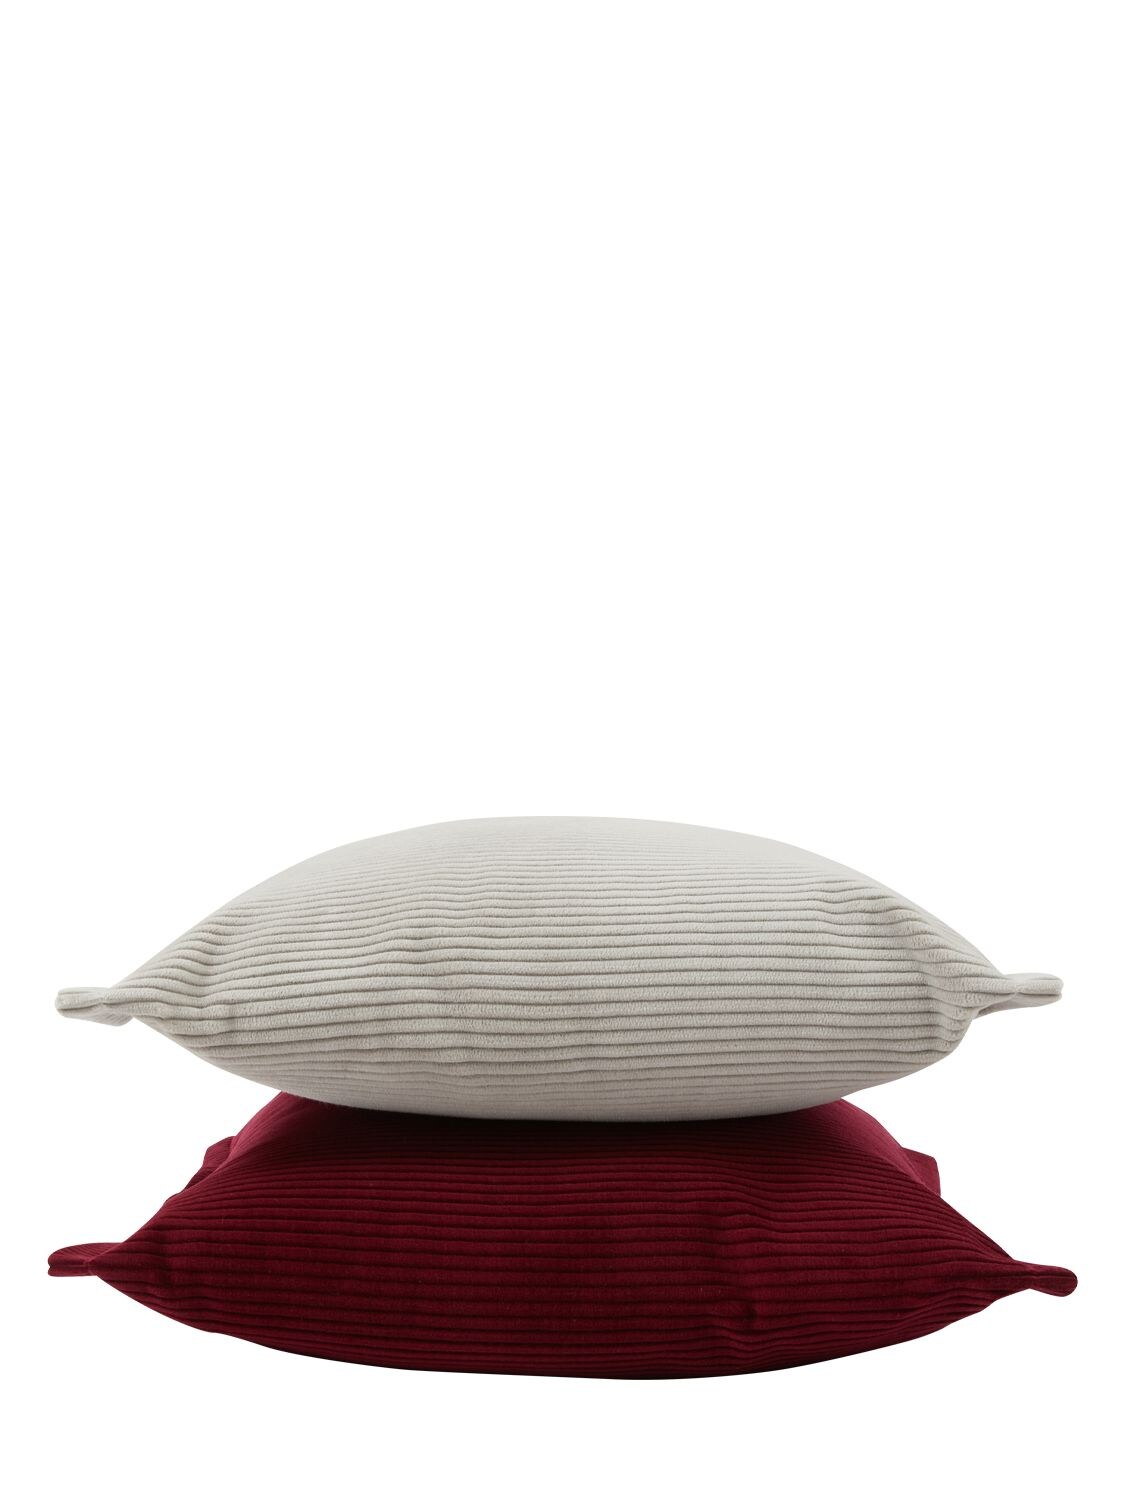 Shop Lanerossi Dueville Cushion In Grey